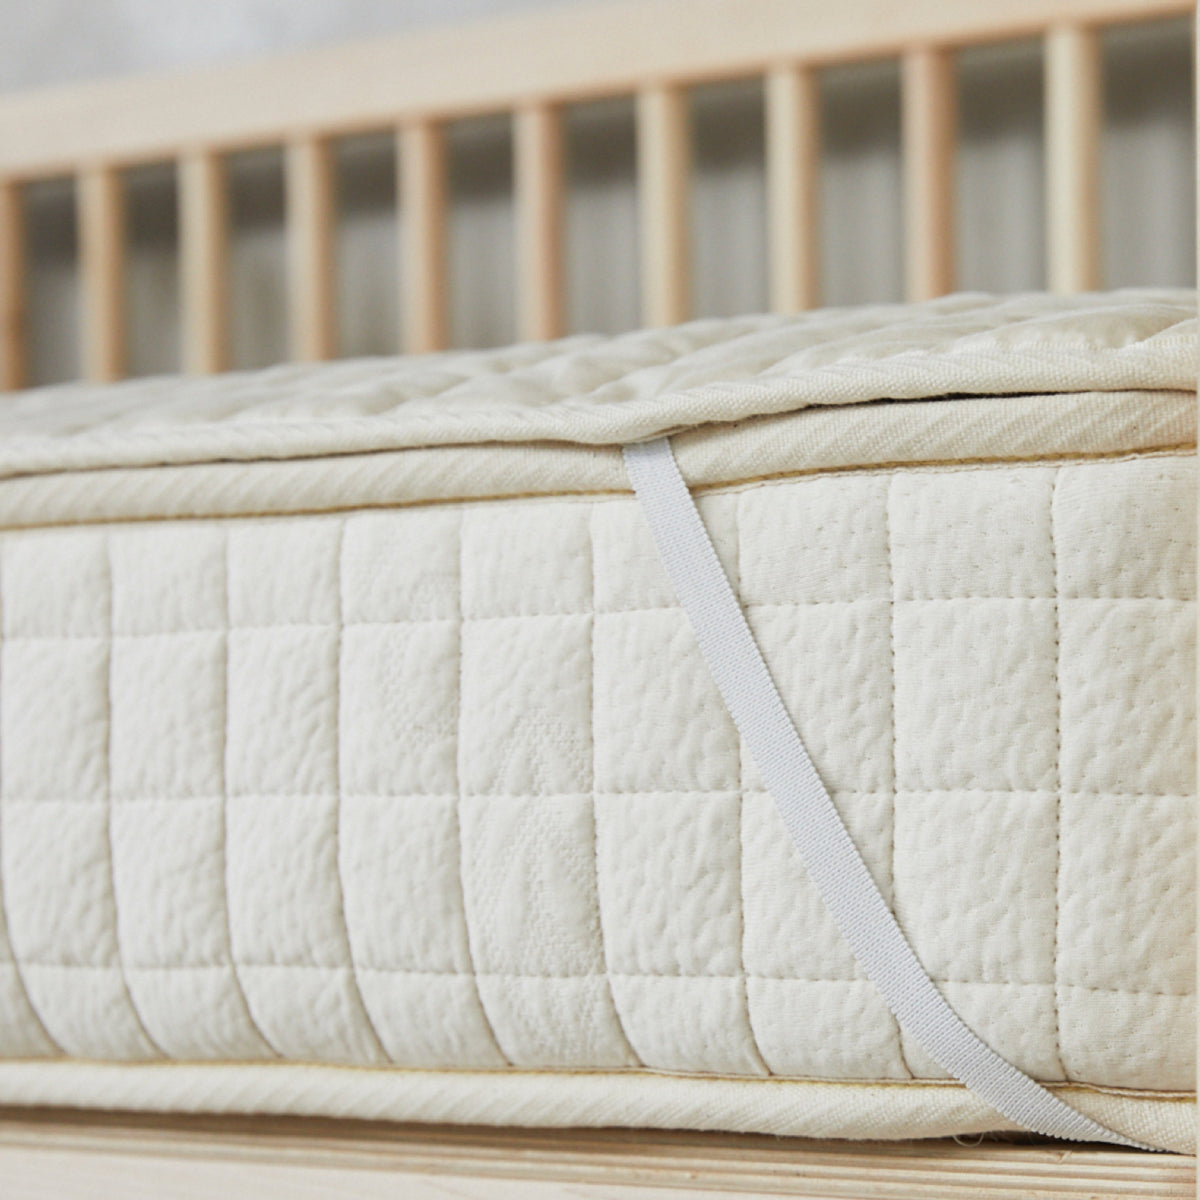 Avocado Green Mattress Organic Crib Pad Protector cotton GOTS certified